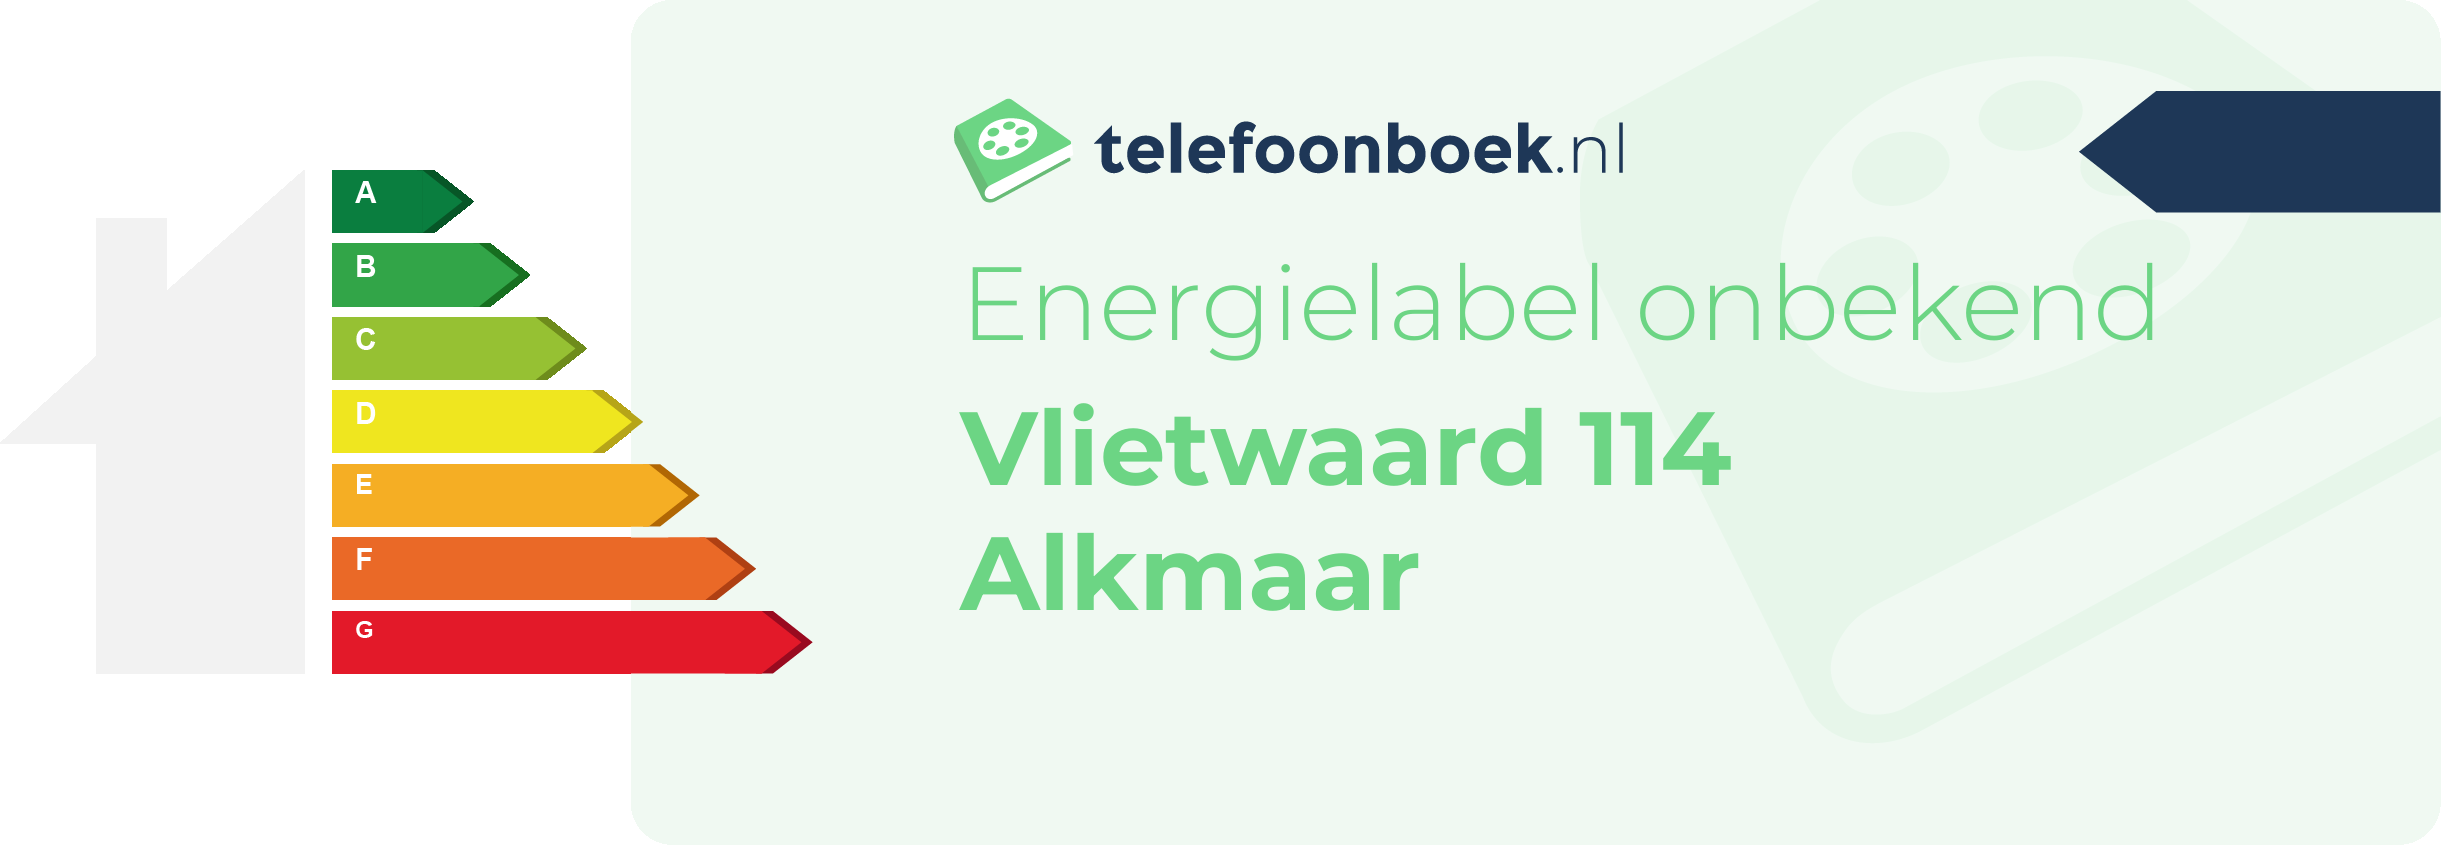 Energielabel Vlietwaard 114 Alkmaar